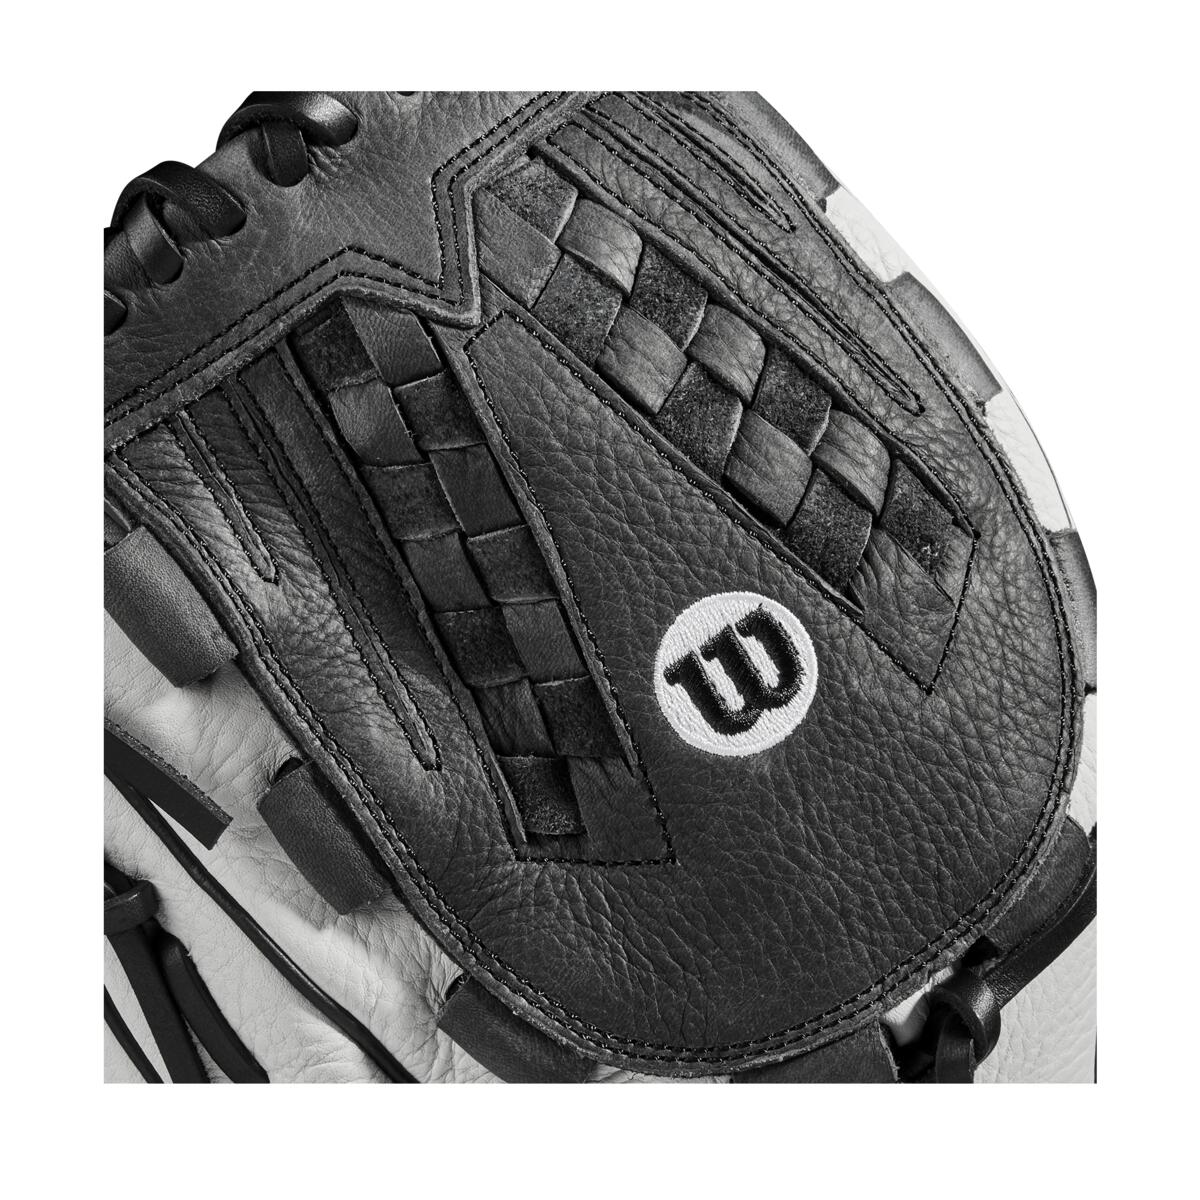 Wilson A1000 V125 FP 12.5" Glove